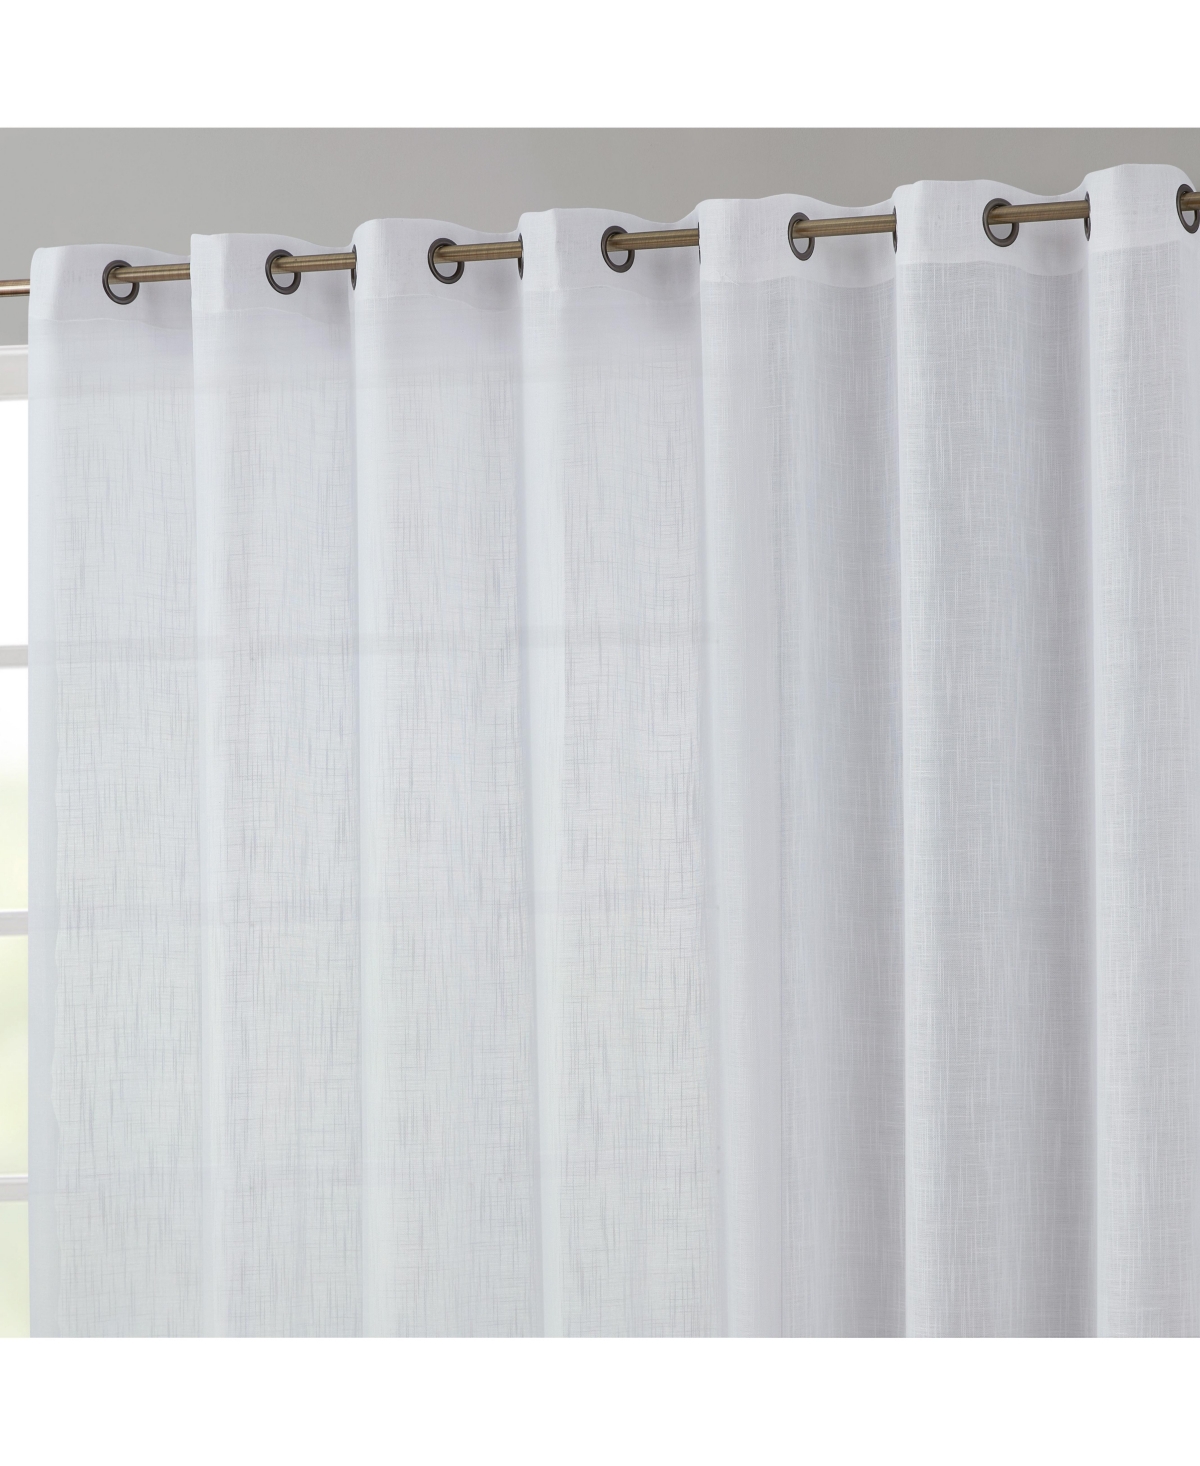 Faux Linen Semi Sheer Extra Wide Light Filtering Patio Door Grommet Curtain Panel for Sliding Glass Doors - White